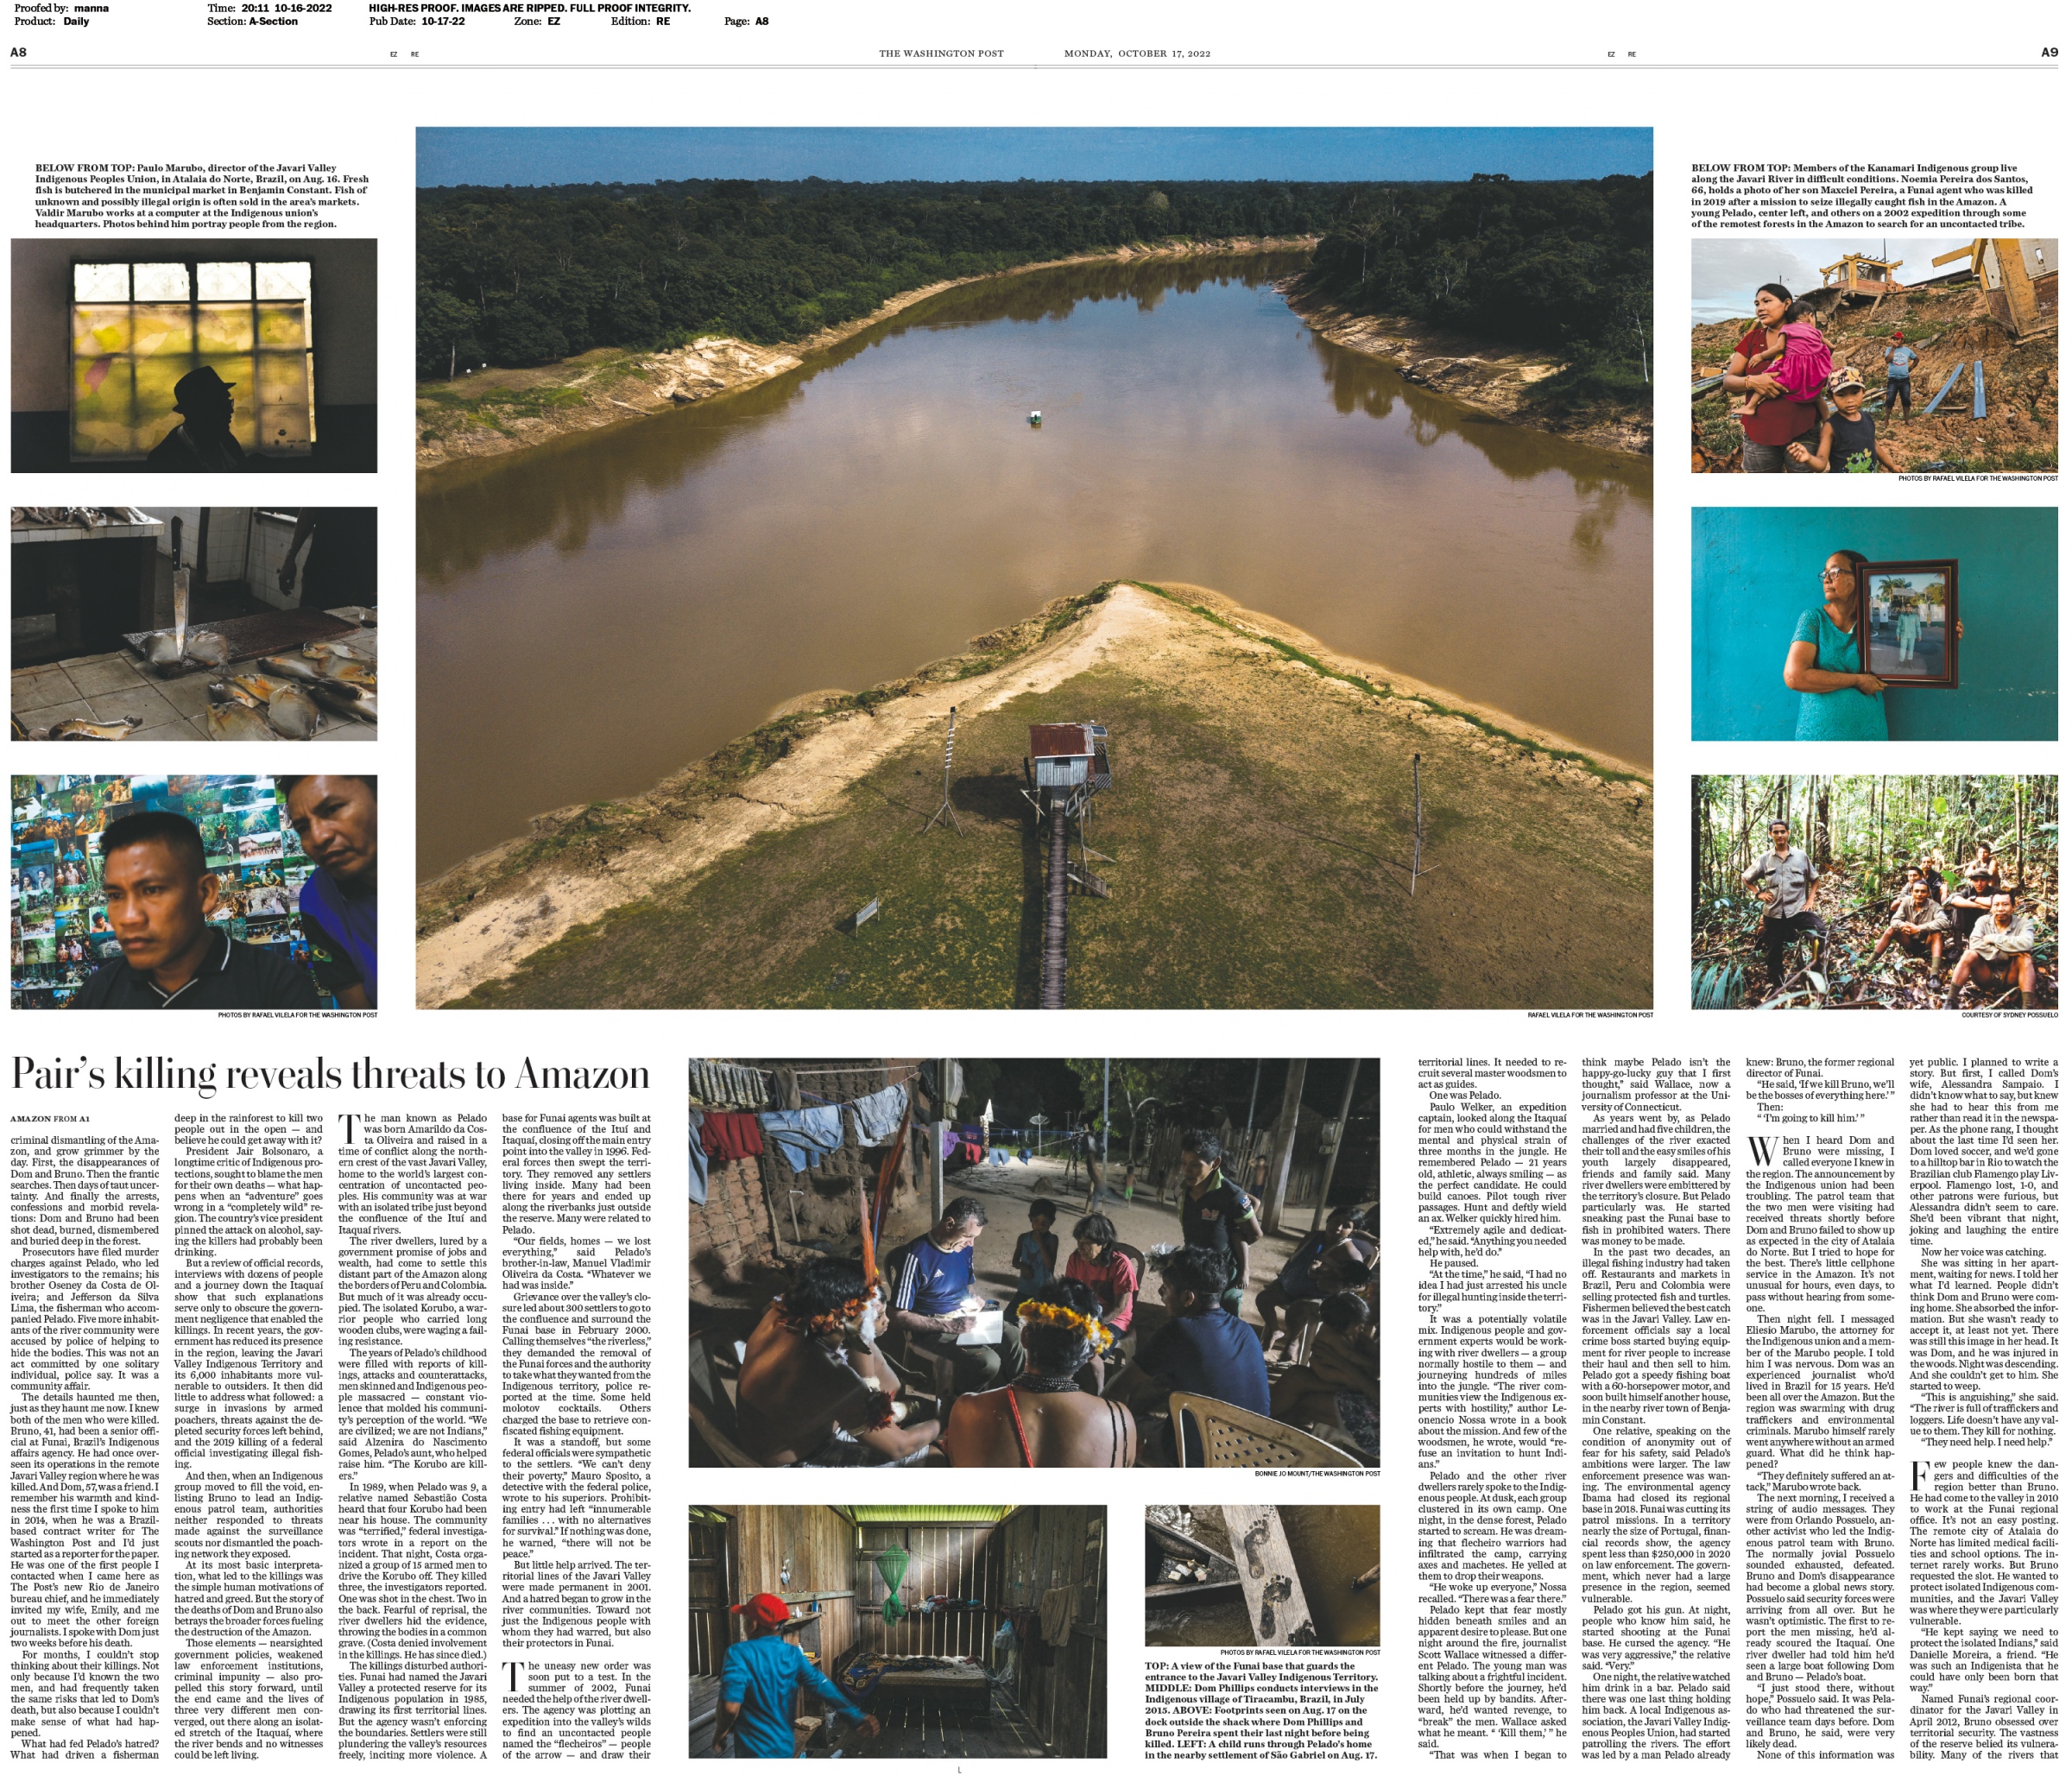 Tearsheets - The Washington Post - 'The Amazon, Undone' series (Pulitzer Finalist)